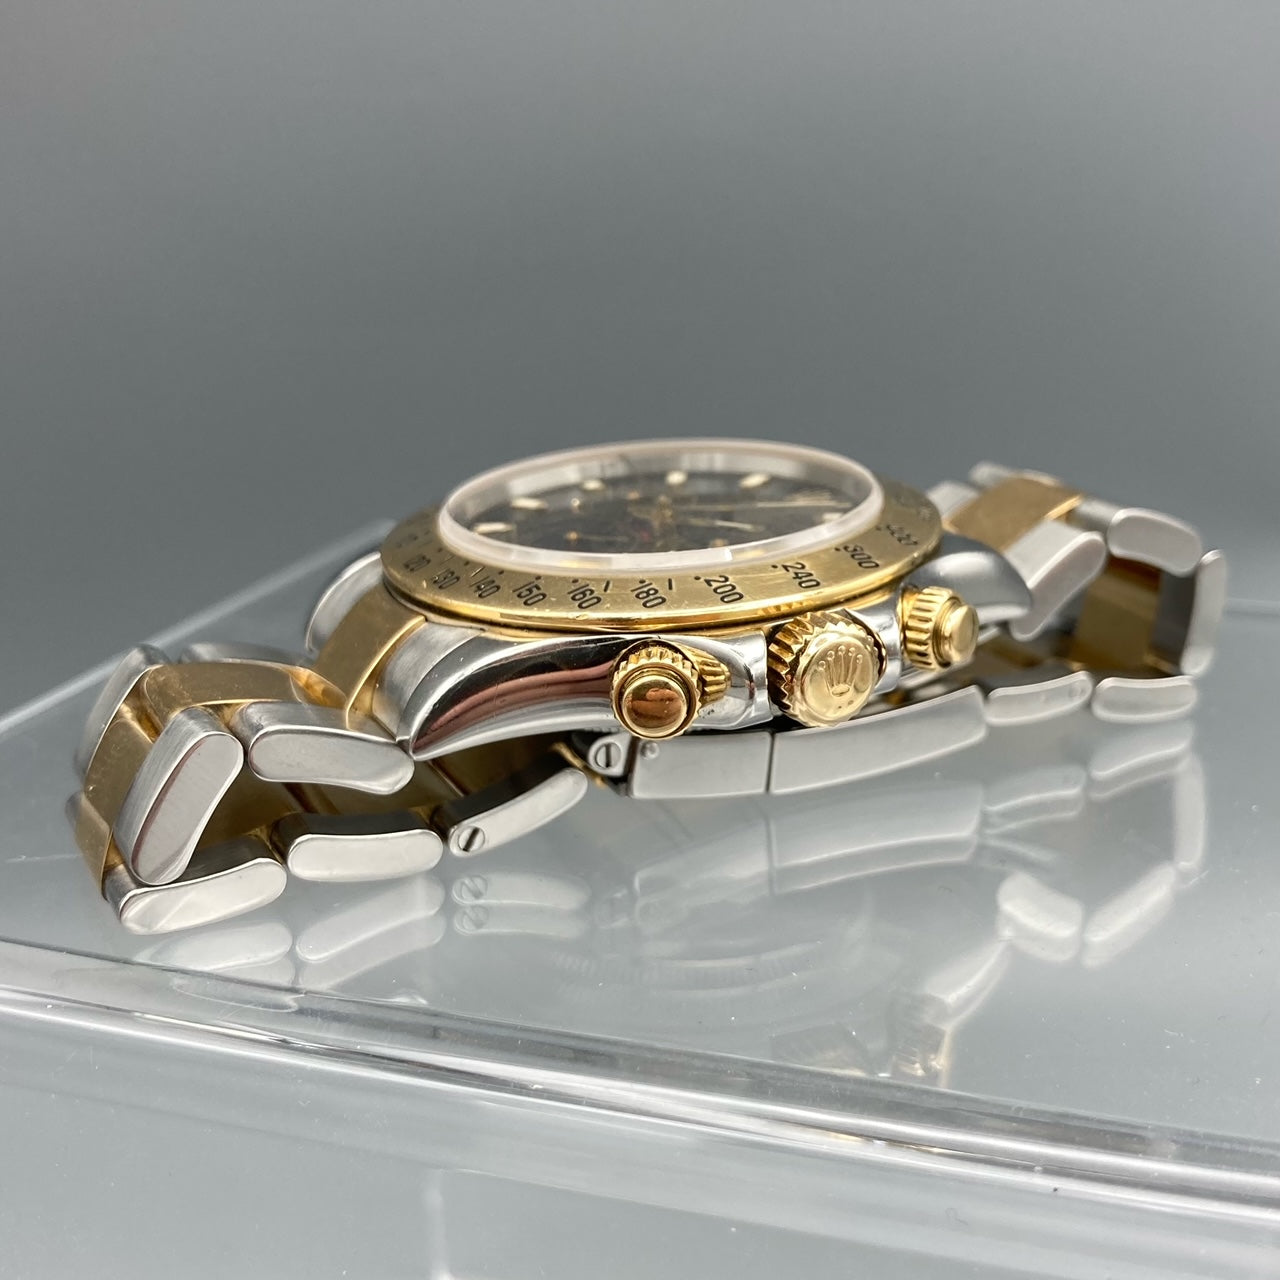 Rolex Daytona Cosmograph Two-Tone Watch 116523